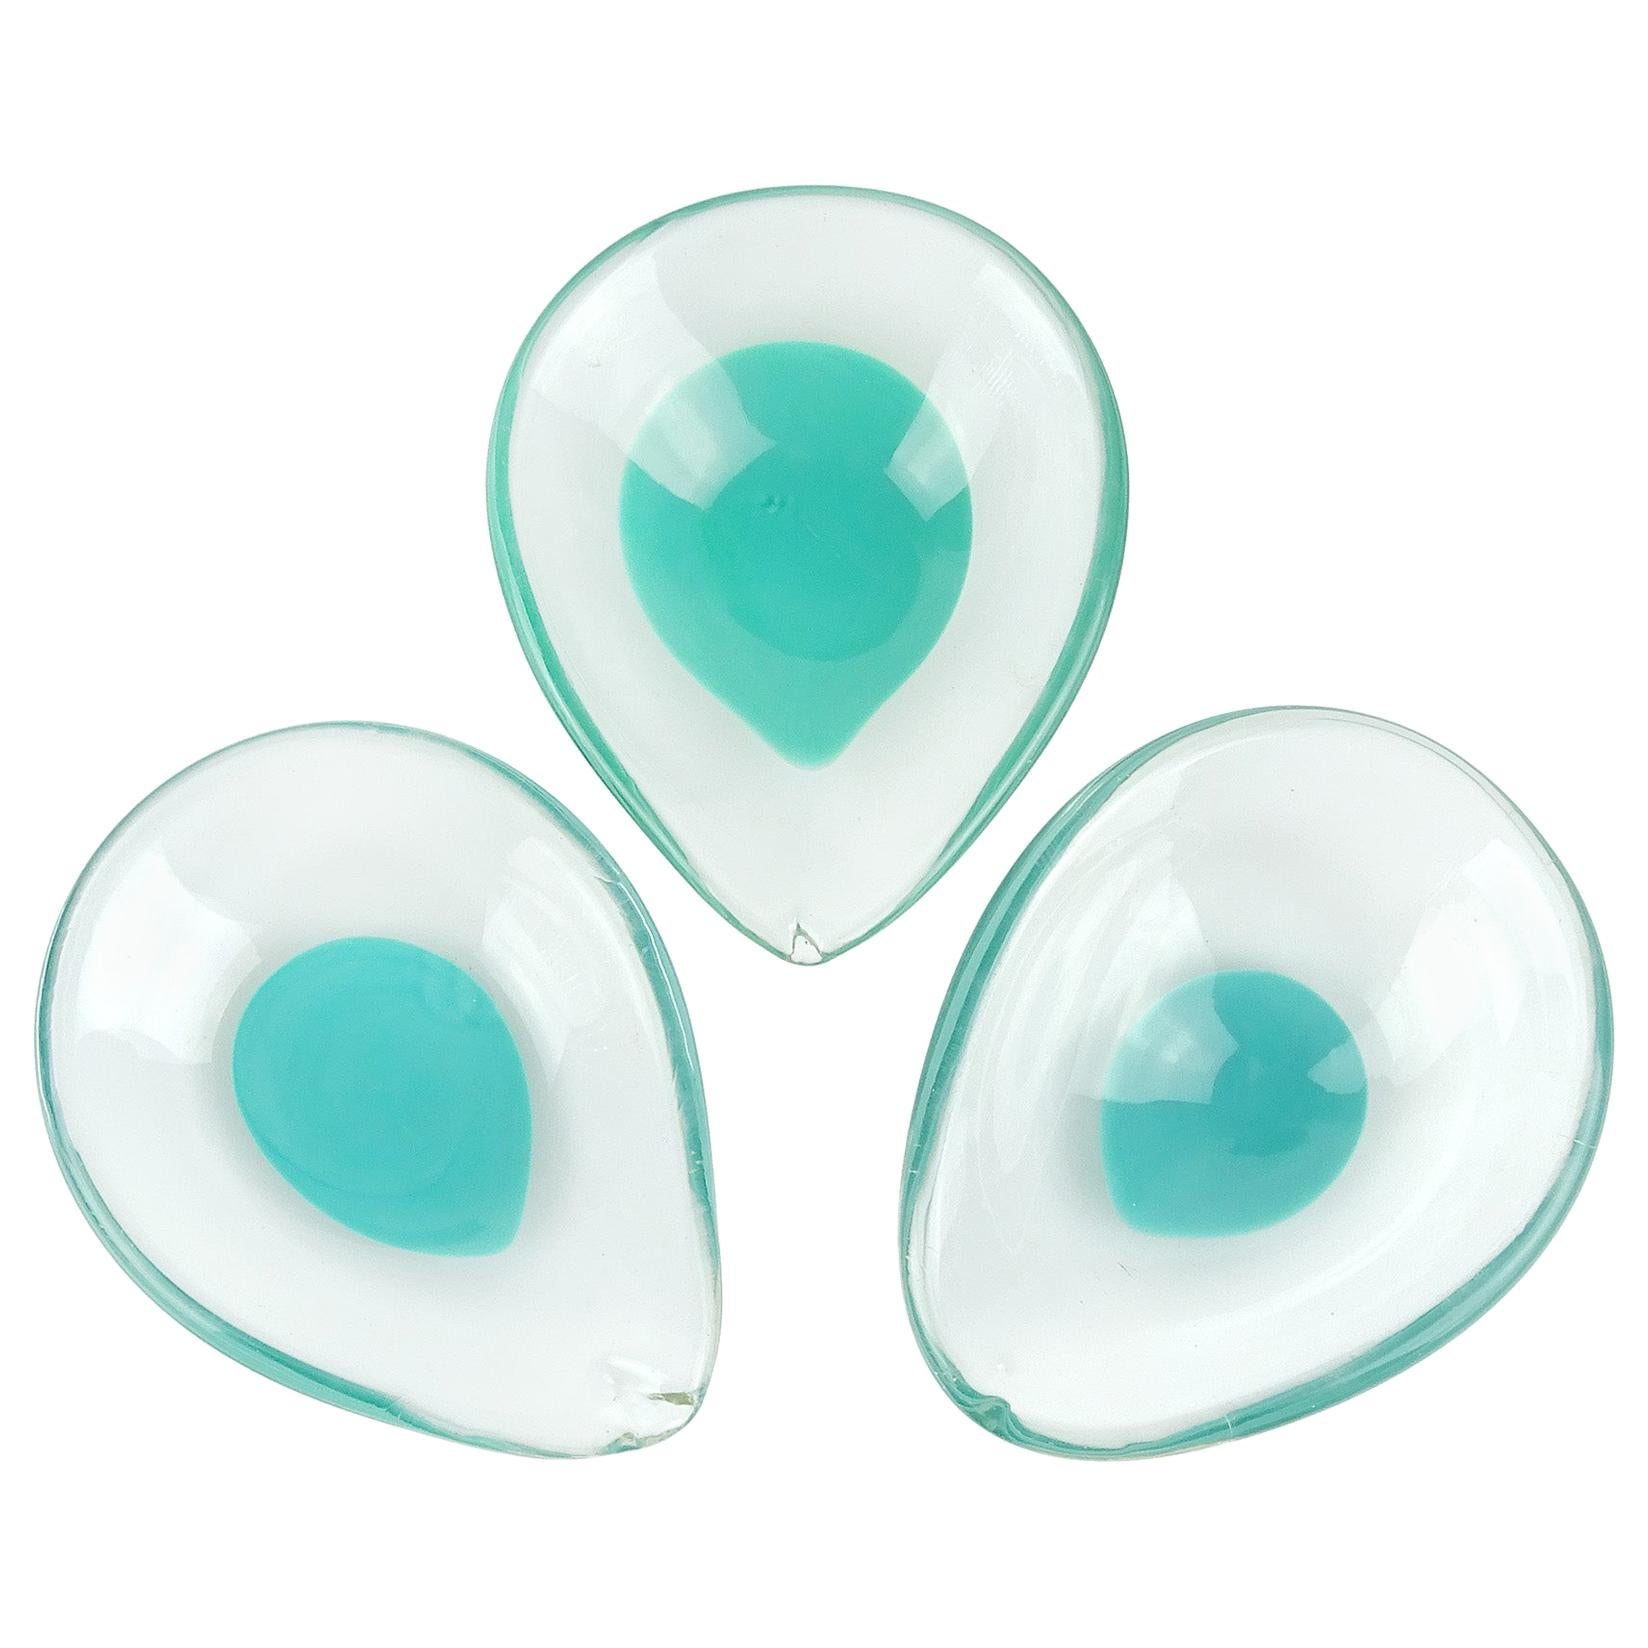 Venini Murano Signed Teal Green Blue Italian Art Glass Teardrop Ring Dishes